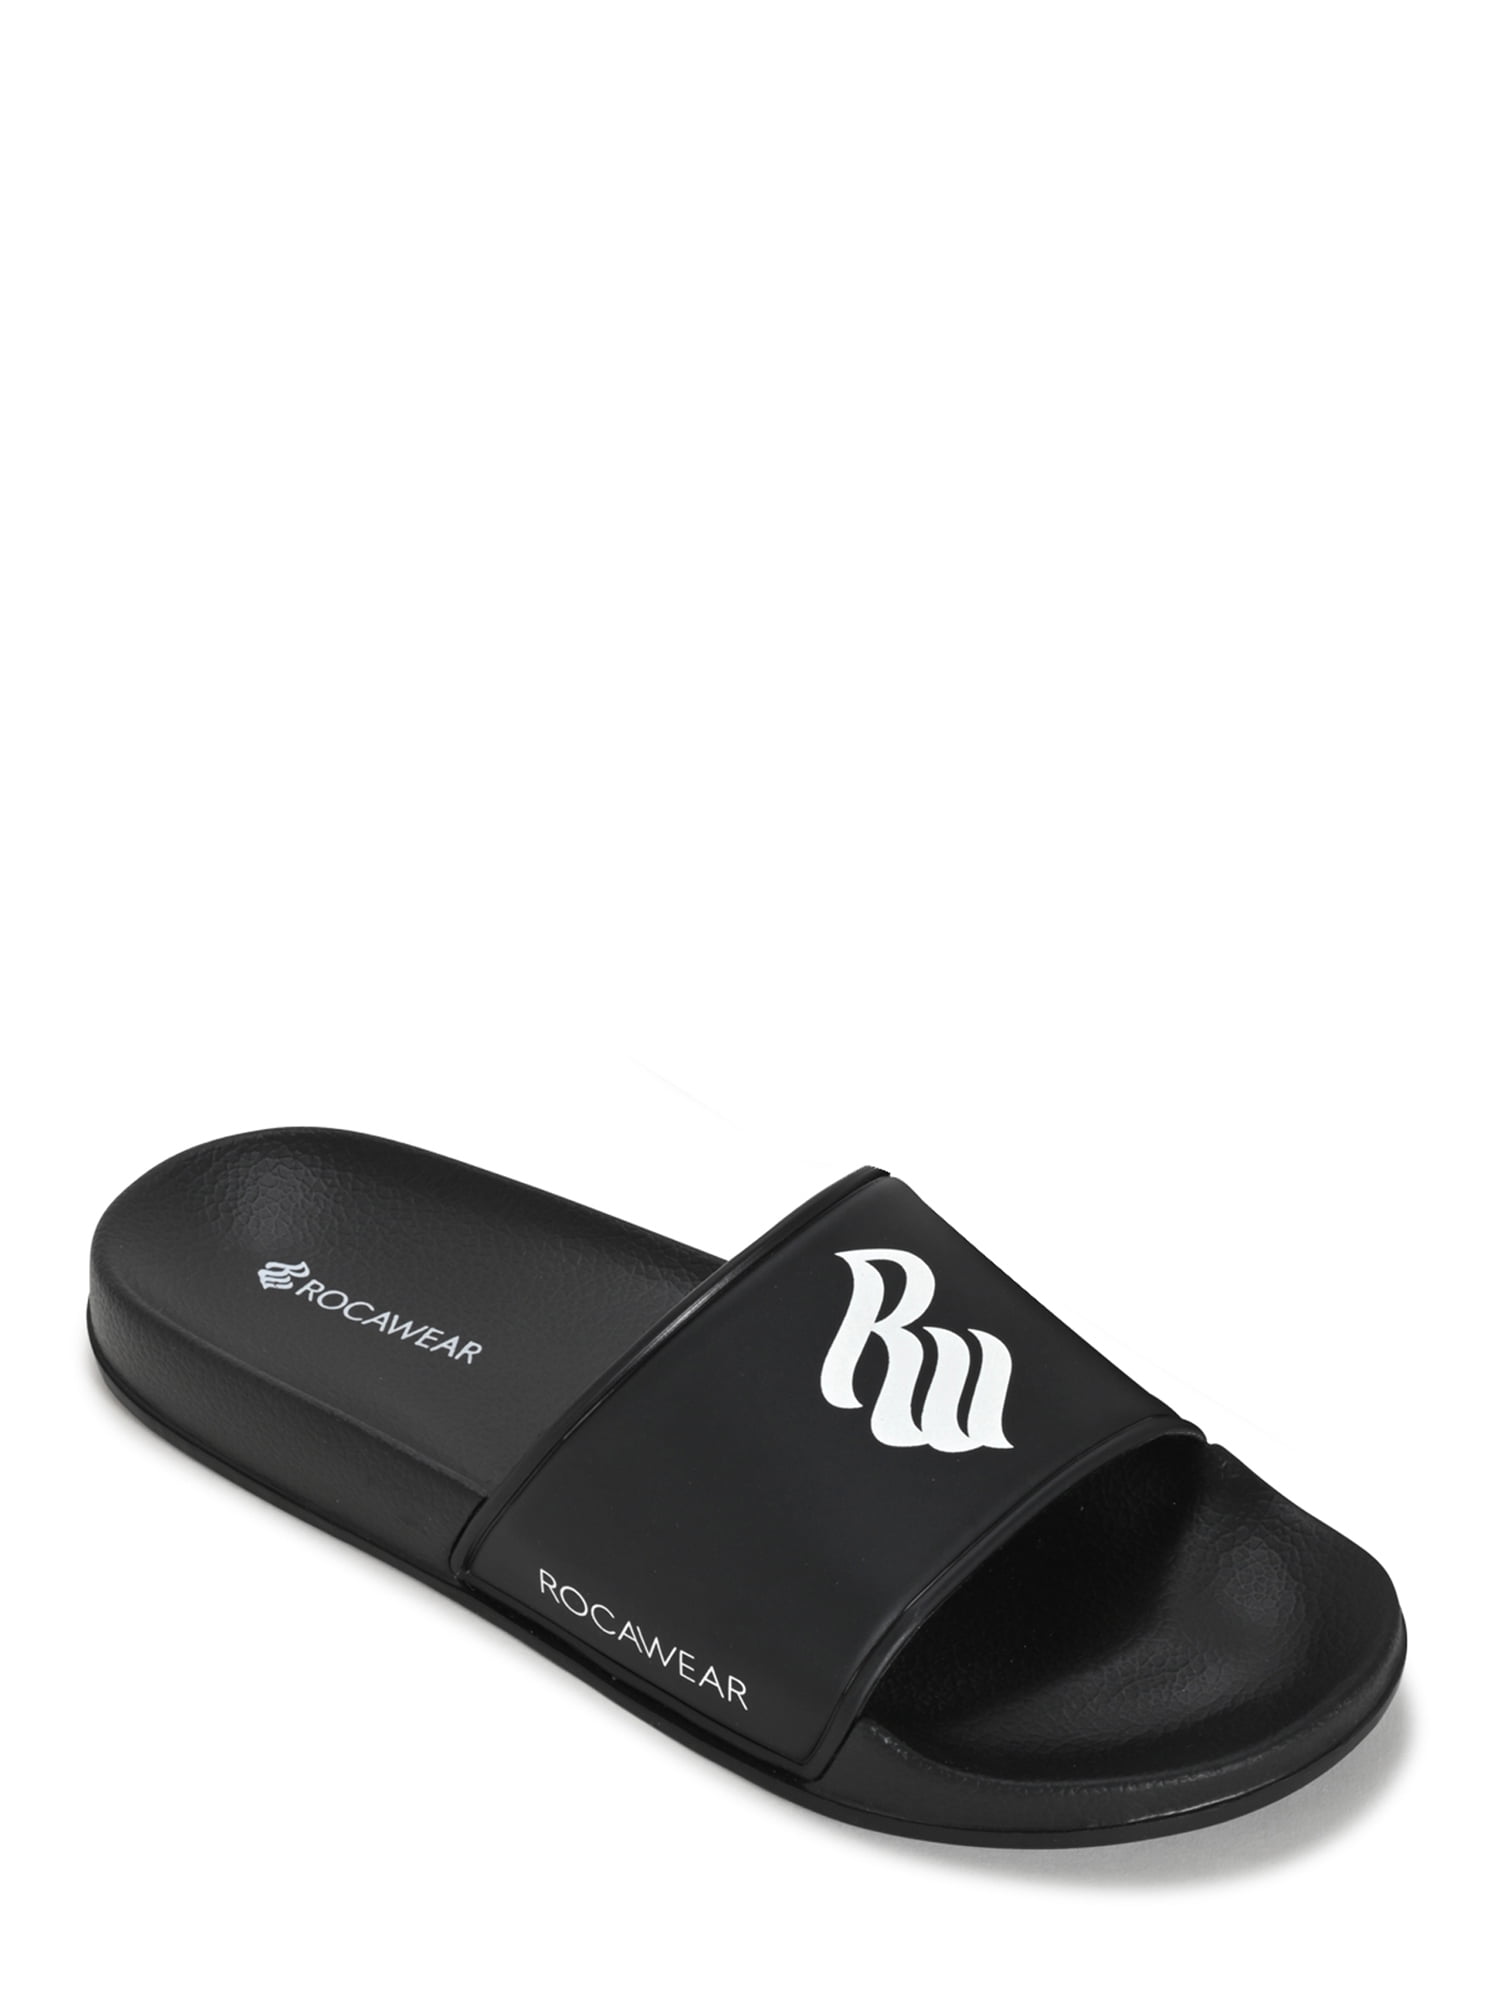 Rocawear Men's Brighton Logo Athletic Slide Sandal - Walmart.com